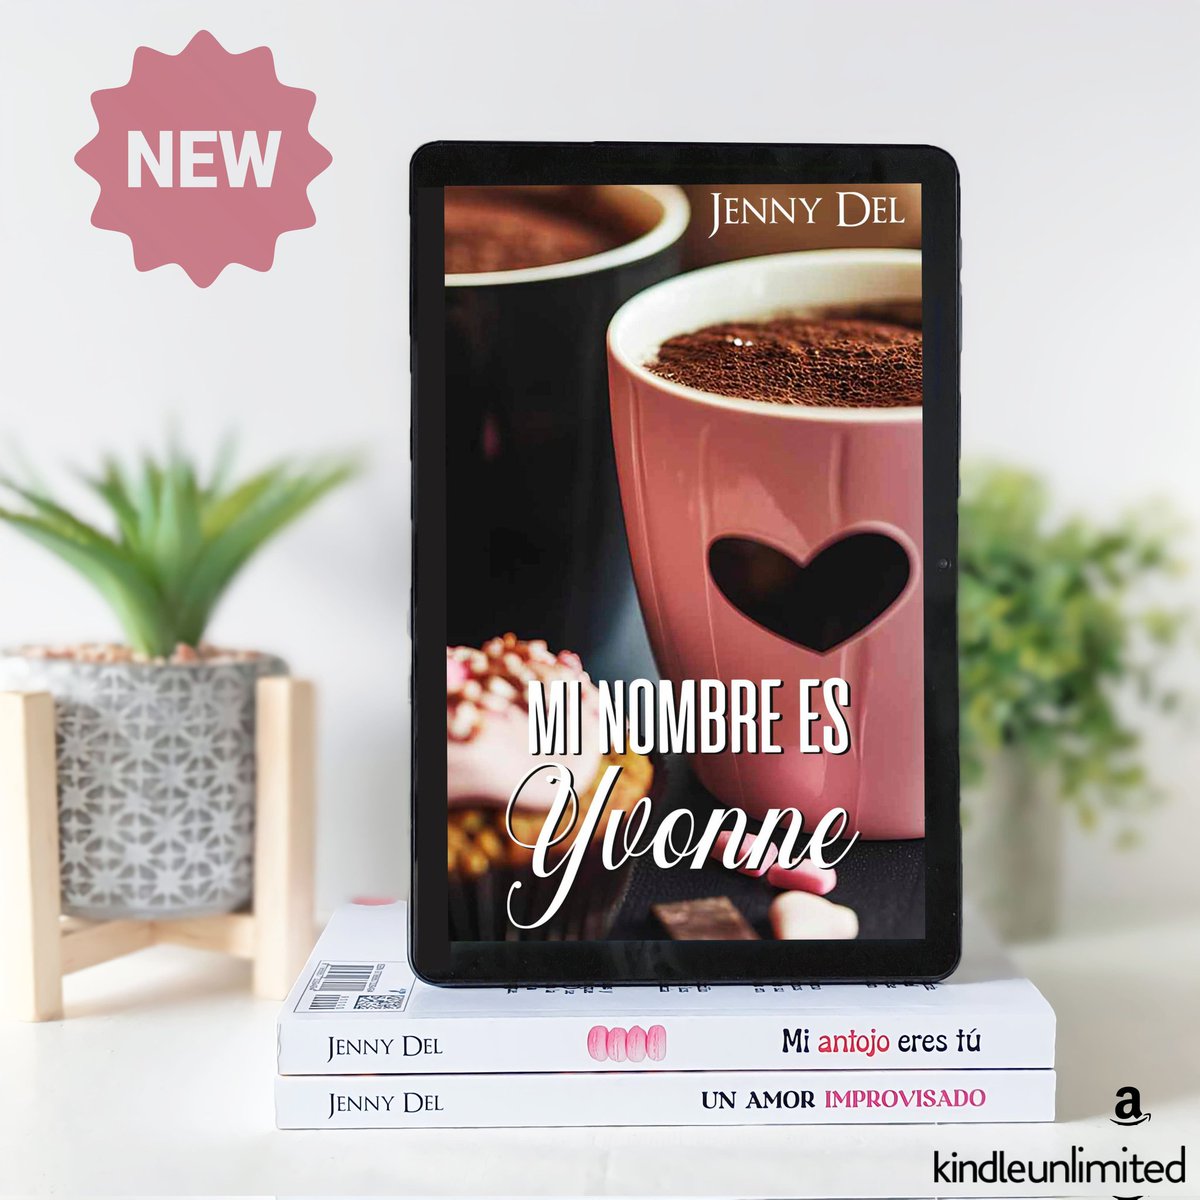 📣💯 NOVEDAD 💯📣

❣️MI NOMBRE ES IVONNE ❣️

📚📱👉🏼 leer.la/B0CSKD66VF

𝑇𝑜𝑑𝑎𝑠 𝑙𝑎𝑠 𝑛𝑜𝑣𝑒𝑙𝑎𝑠 𝑑𝑒 𝑙𝑎 𝑎𝑢𝑡𝑜𝑟𝑎 ➡️ relinks.me/JennyDel

#Amazon #KindleUnlimited #ebook #queleer #escritor #LecturaRecomendada #amor #novelaromantica #jennydelautora